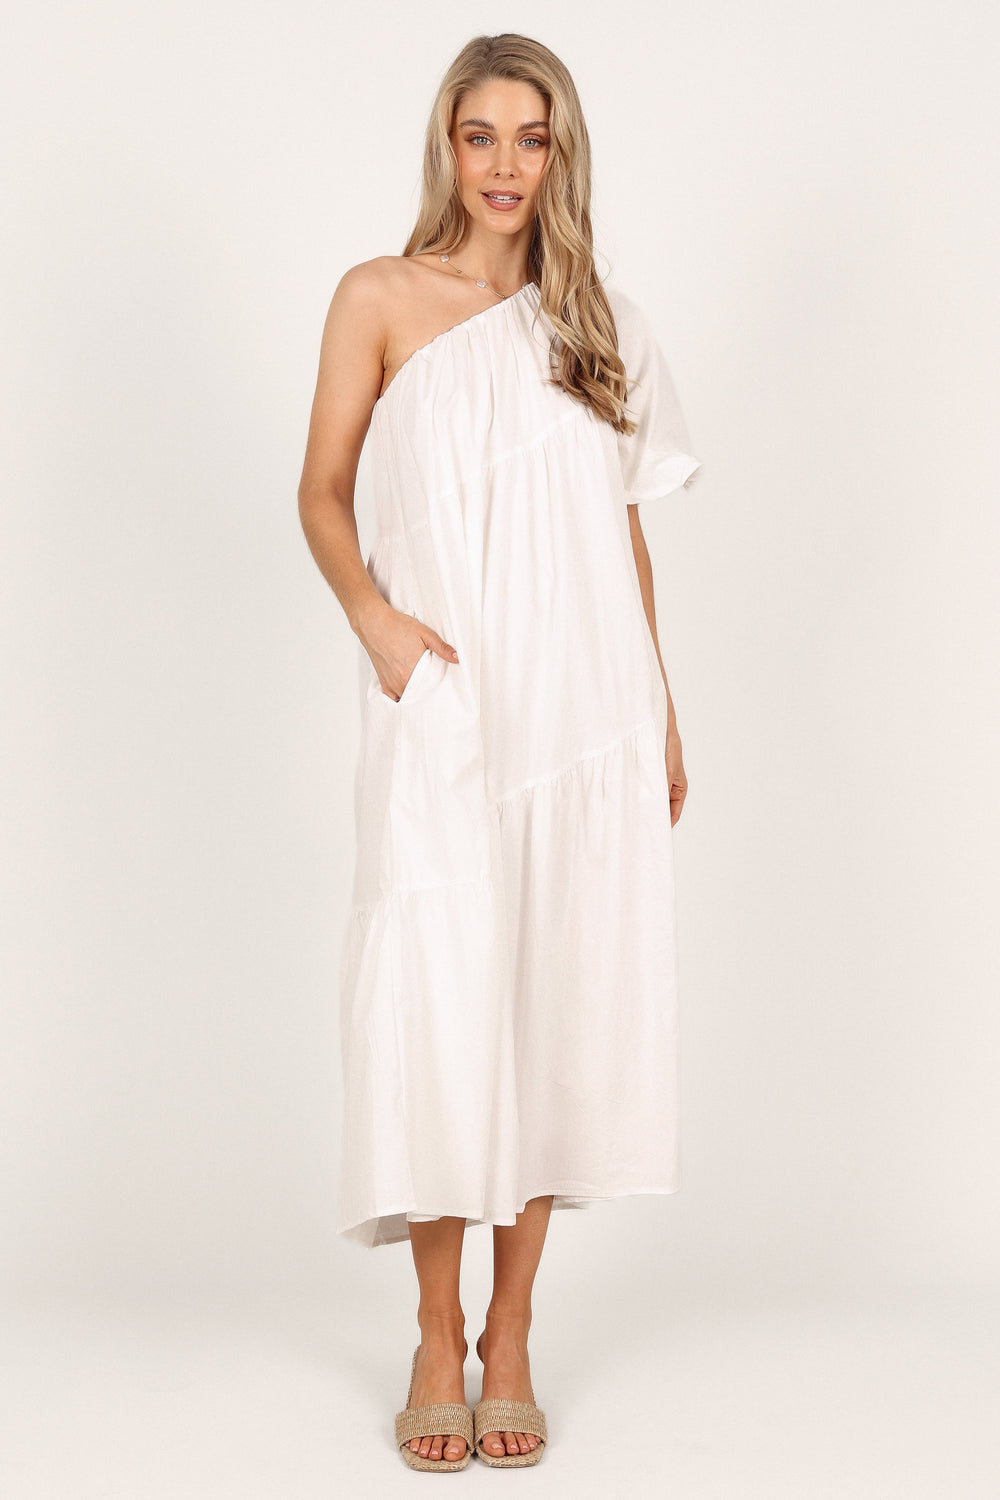 DRESSES Stephanie One Shoulder Puff Sleeve Midi Dress - White